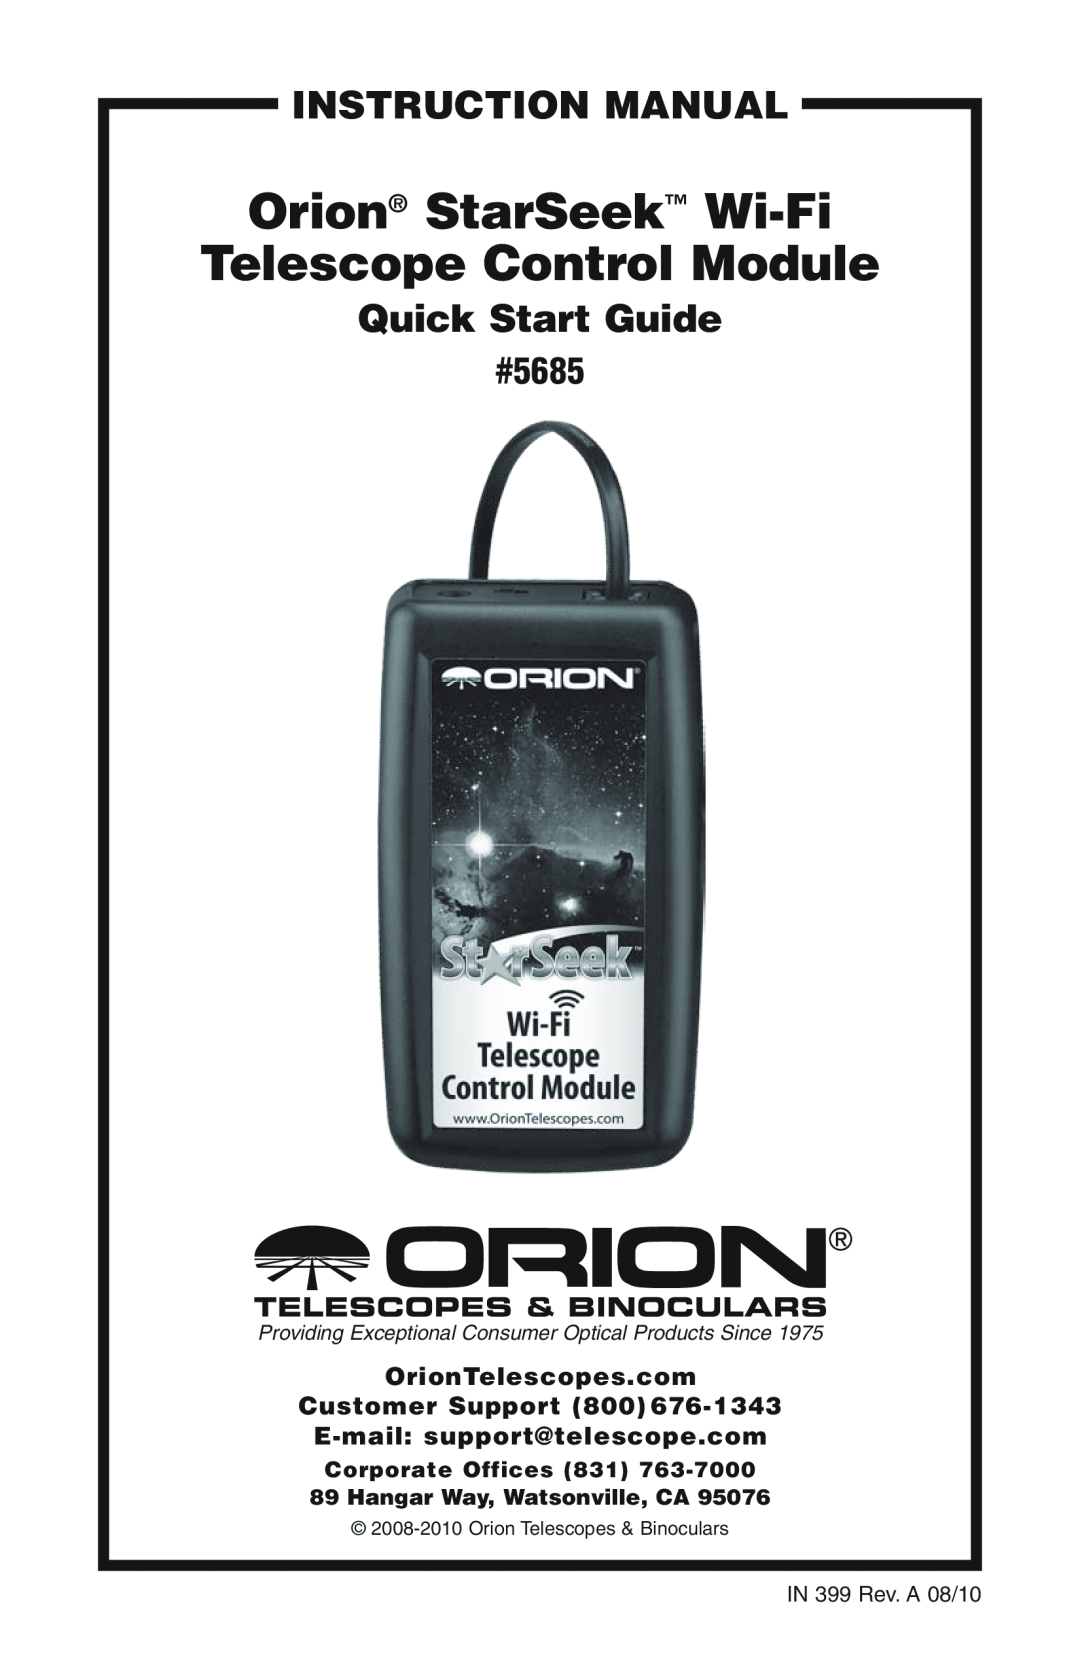 Orion instruction manual Quick Start Guide, Orion StarSeek Wi-Fi Telescope Control Module, #5685 